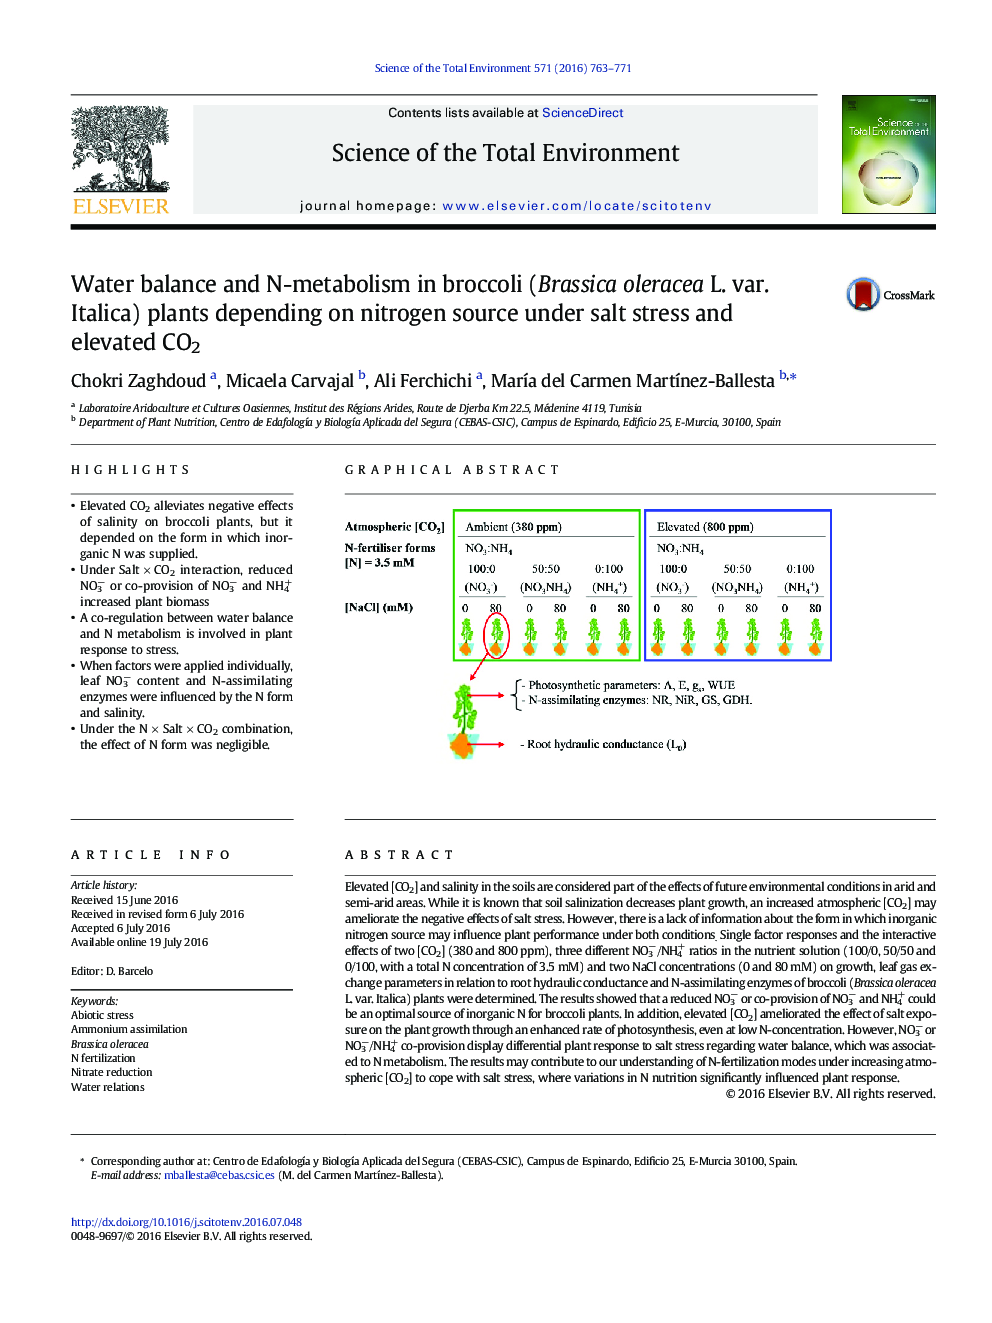 Water balance and N-metabolism in broccoli (Brassica oleracea L. var. Italica) plants depending on nitrogen source under salt stress and elevated CO2